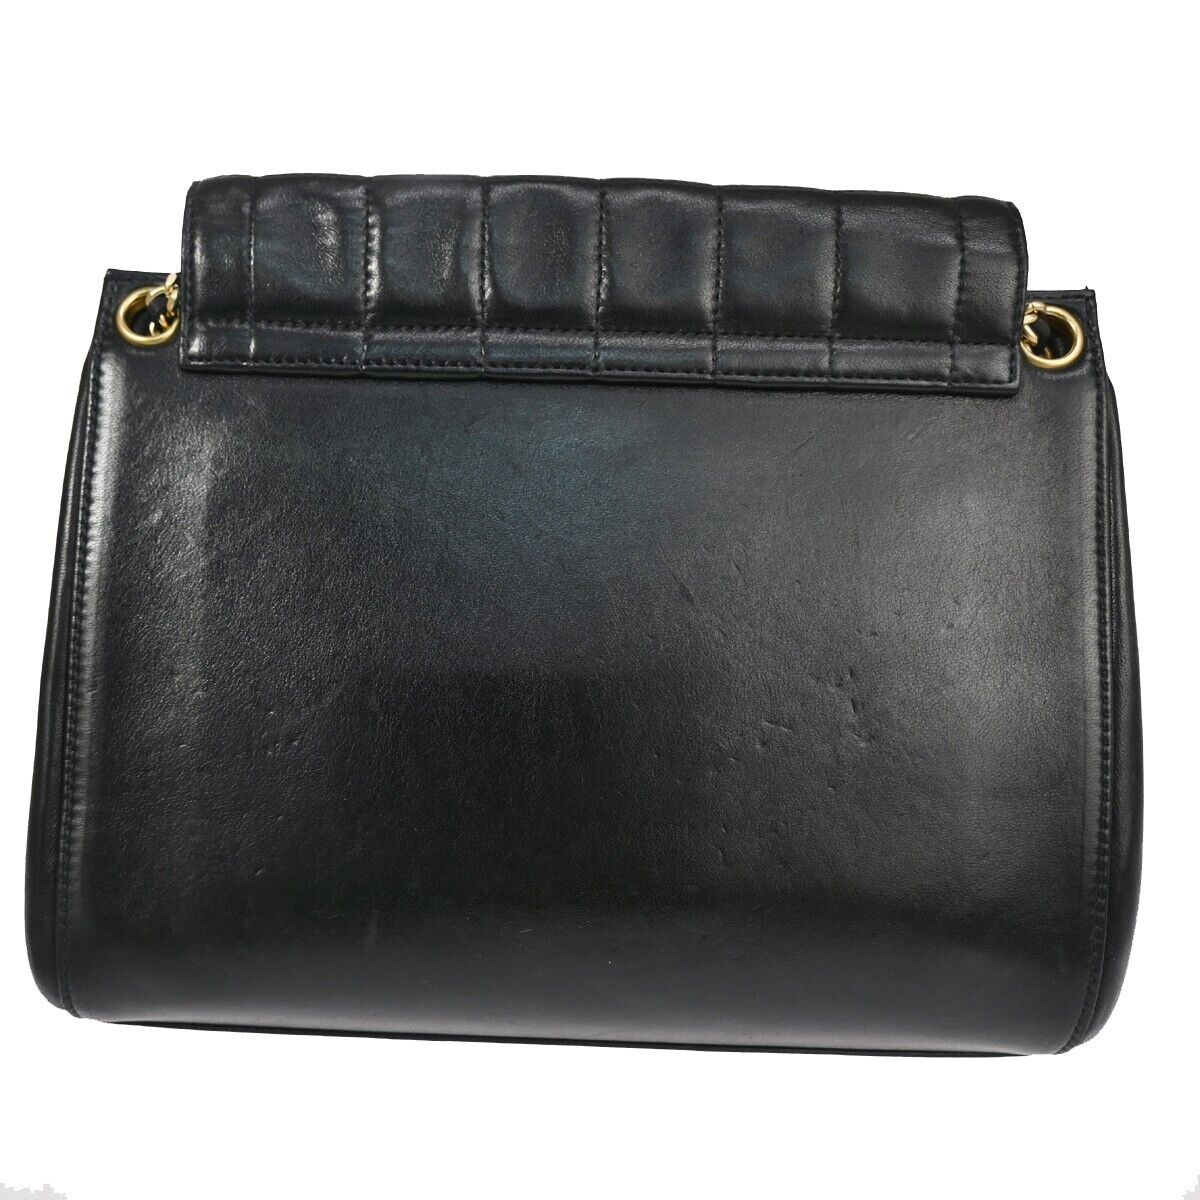 Pre-owned Chanel Chocolate Bar Black Leather Shoulder Bag ()